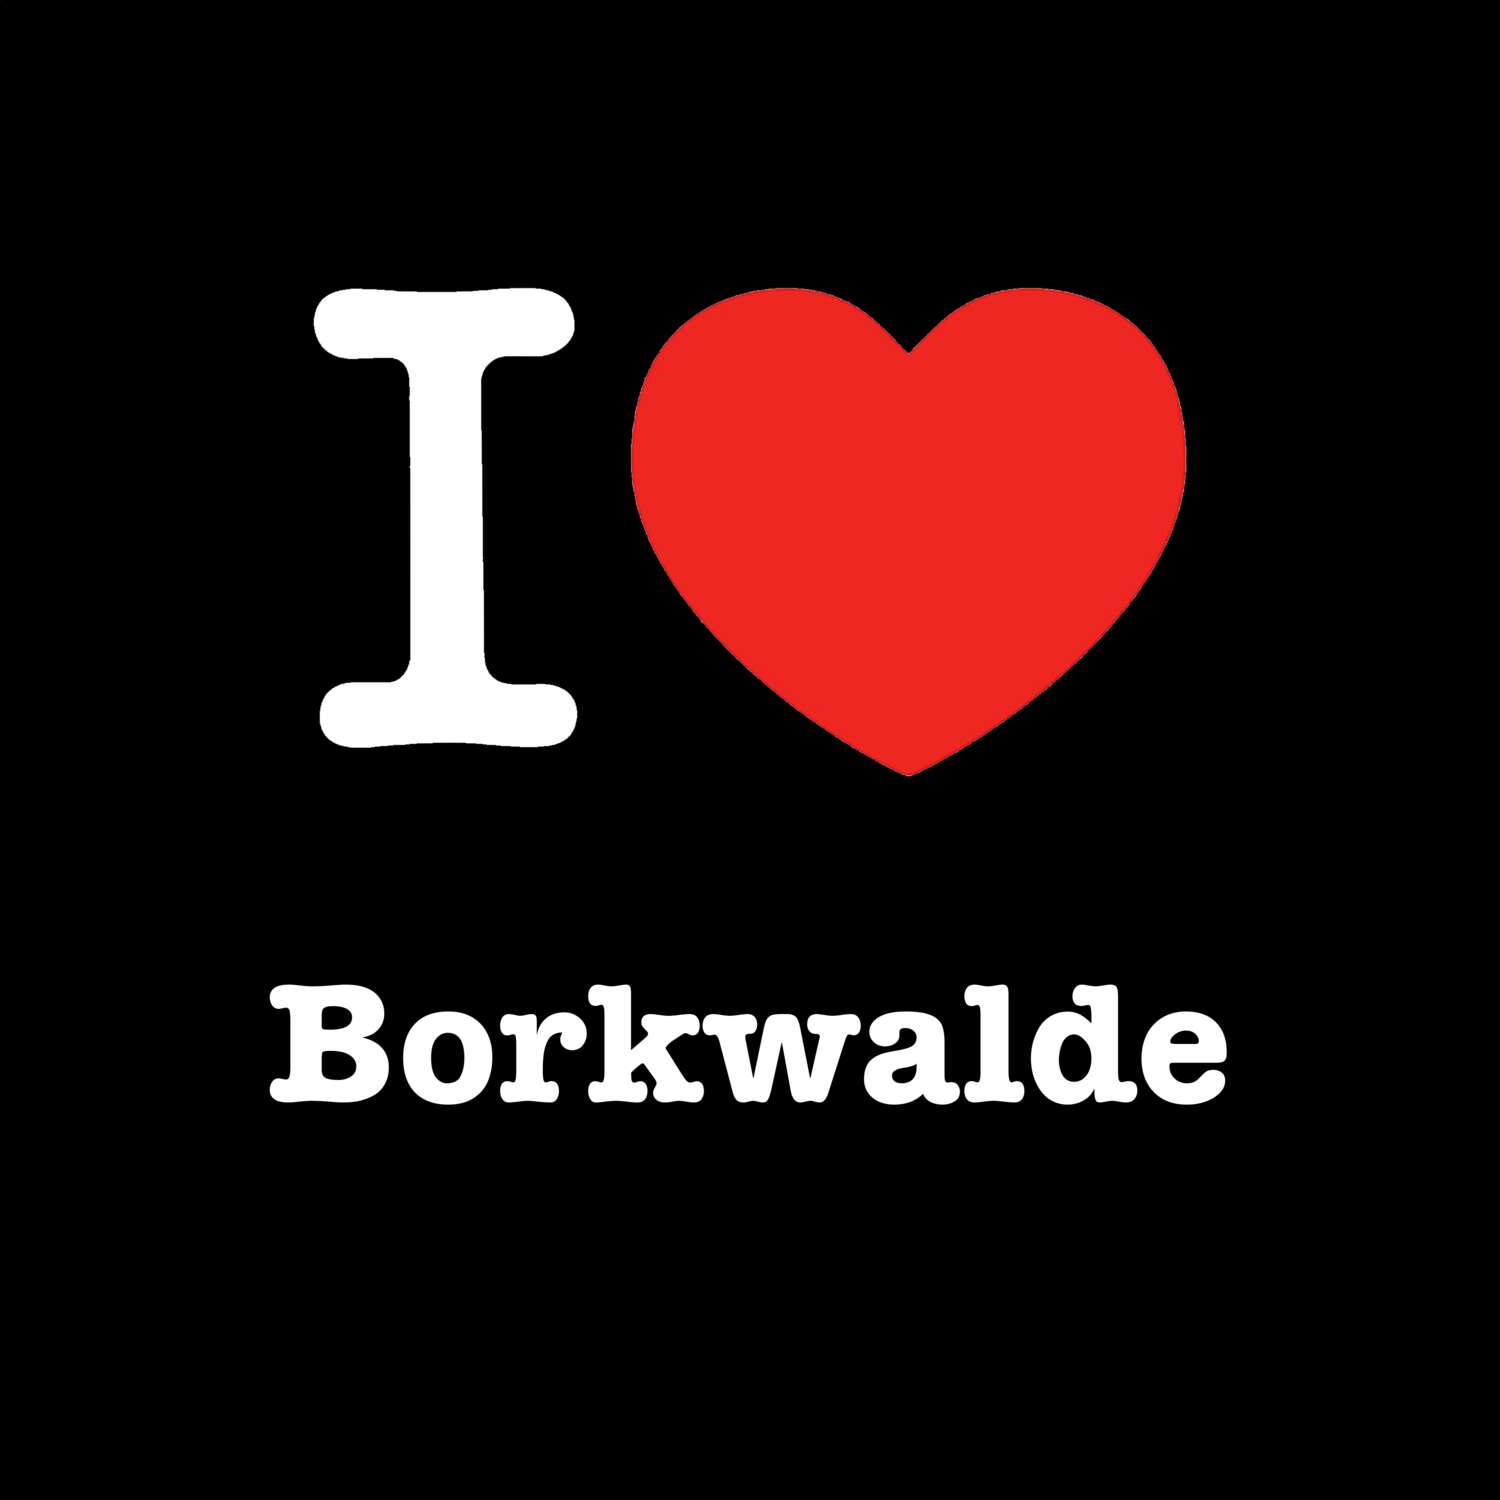 Borkwalde T-Shirt »I love«